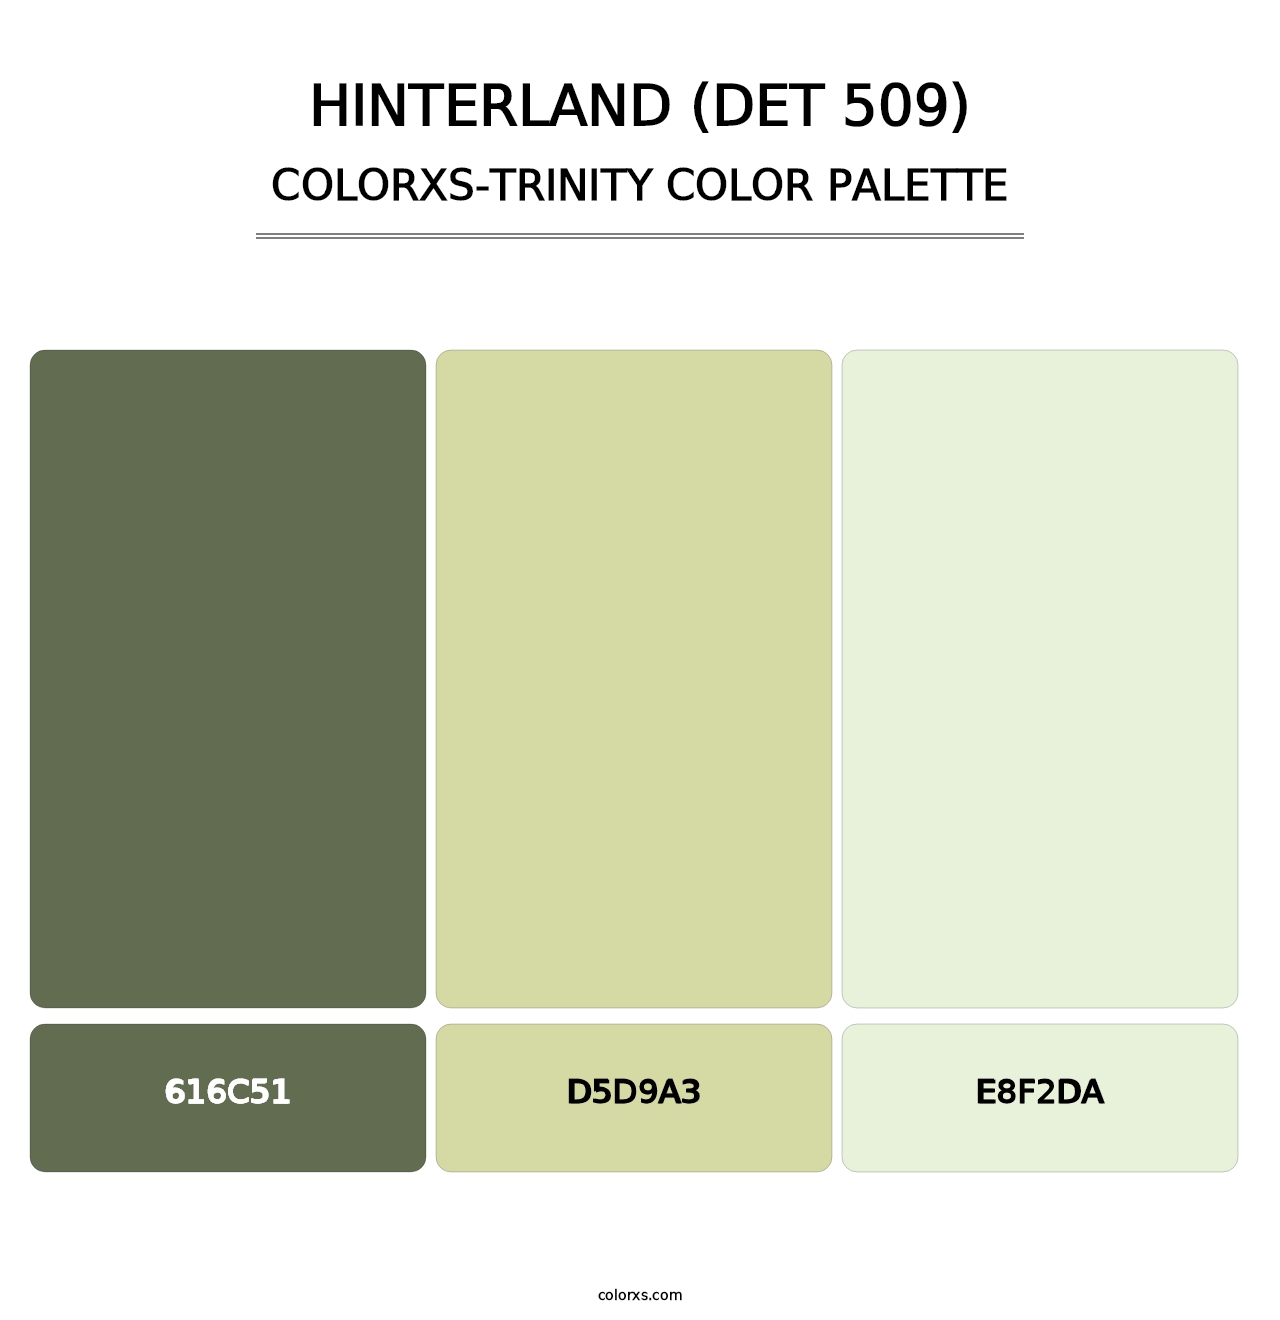 Hinterland (DET 509) - Colorxs Trinity Palette